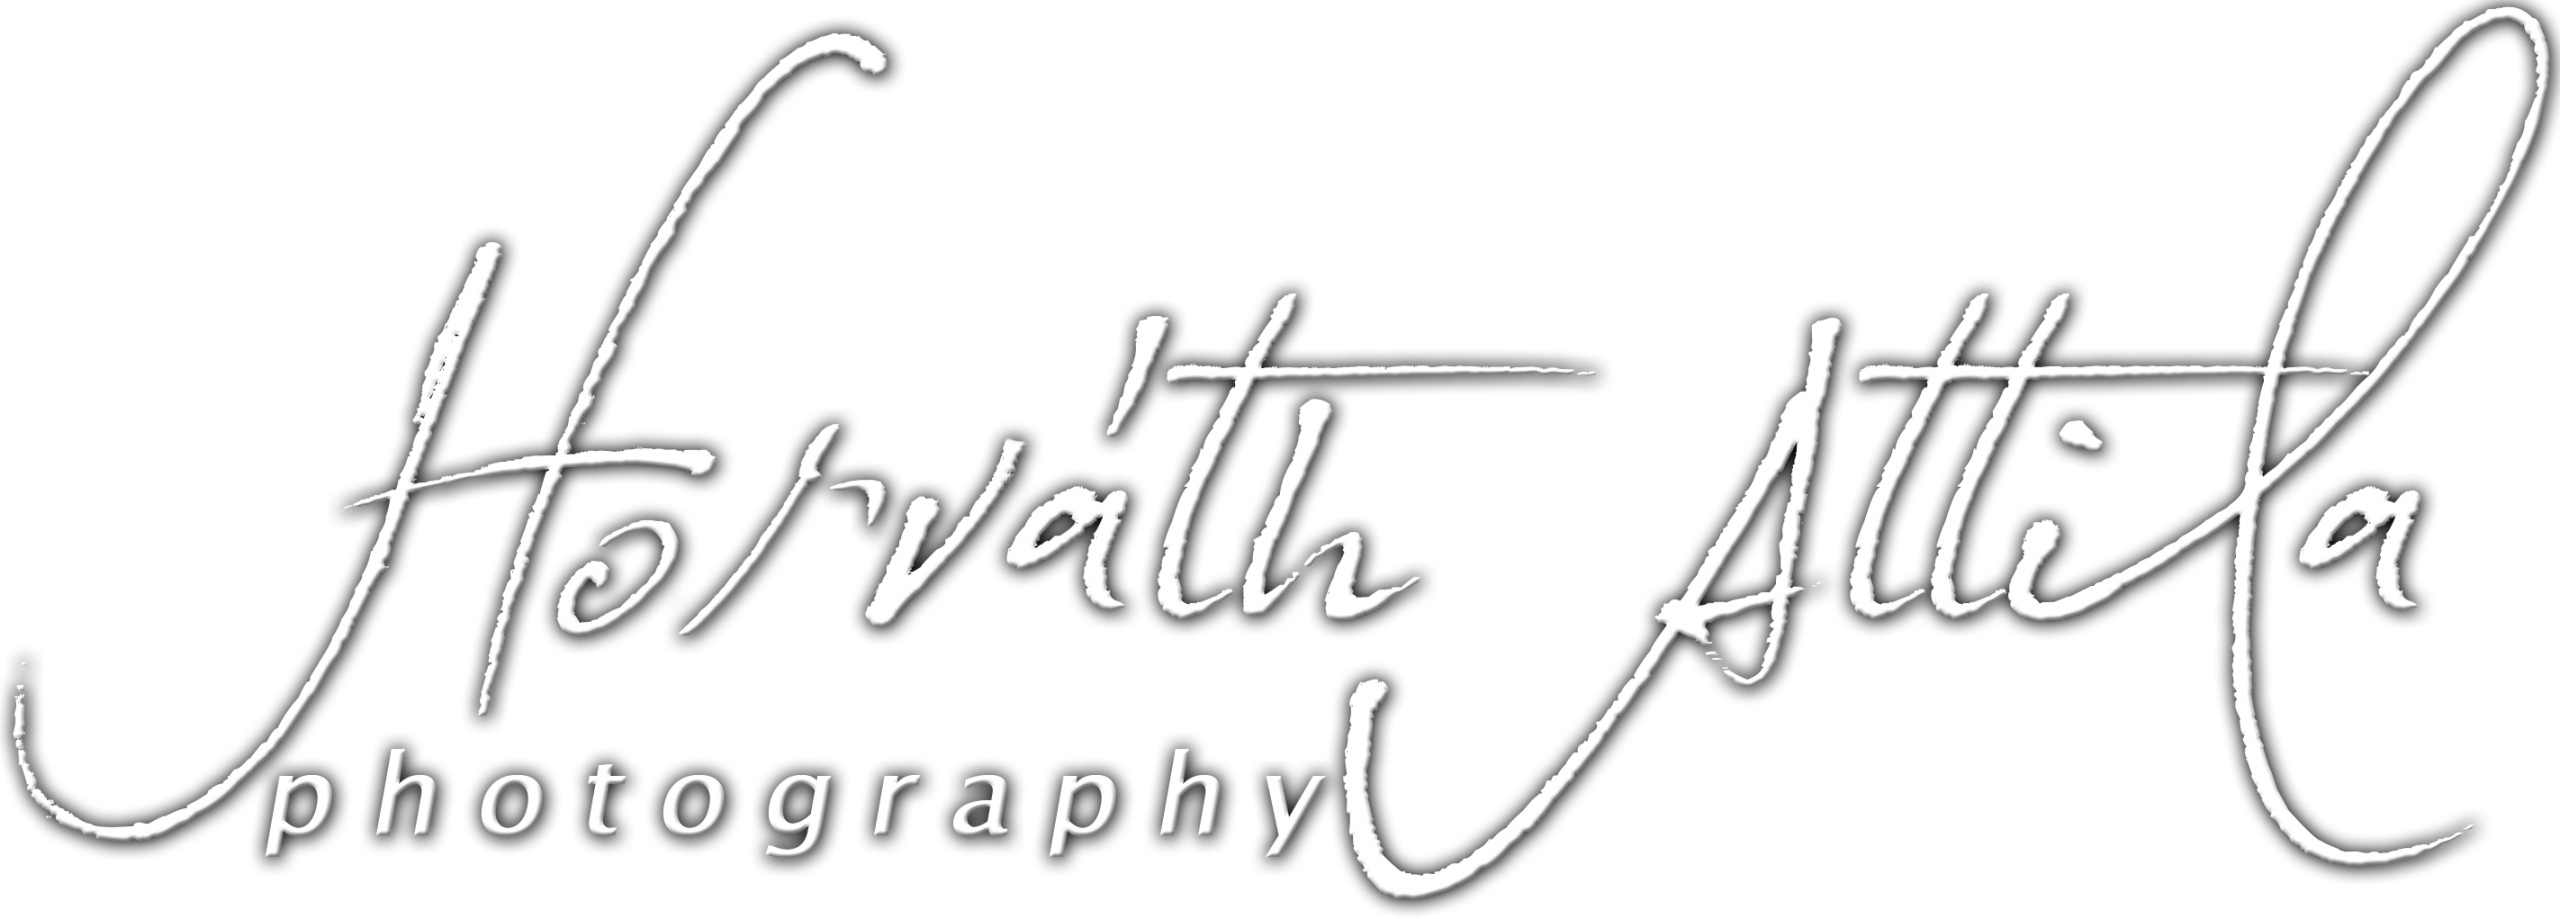 Horvath Attila Photography